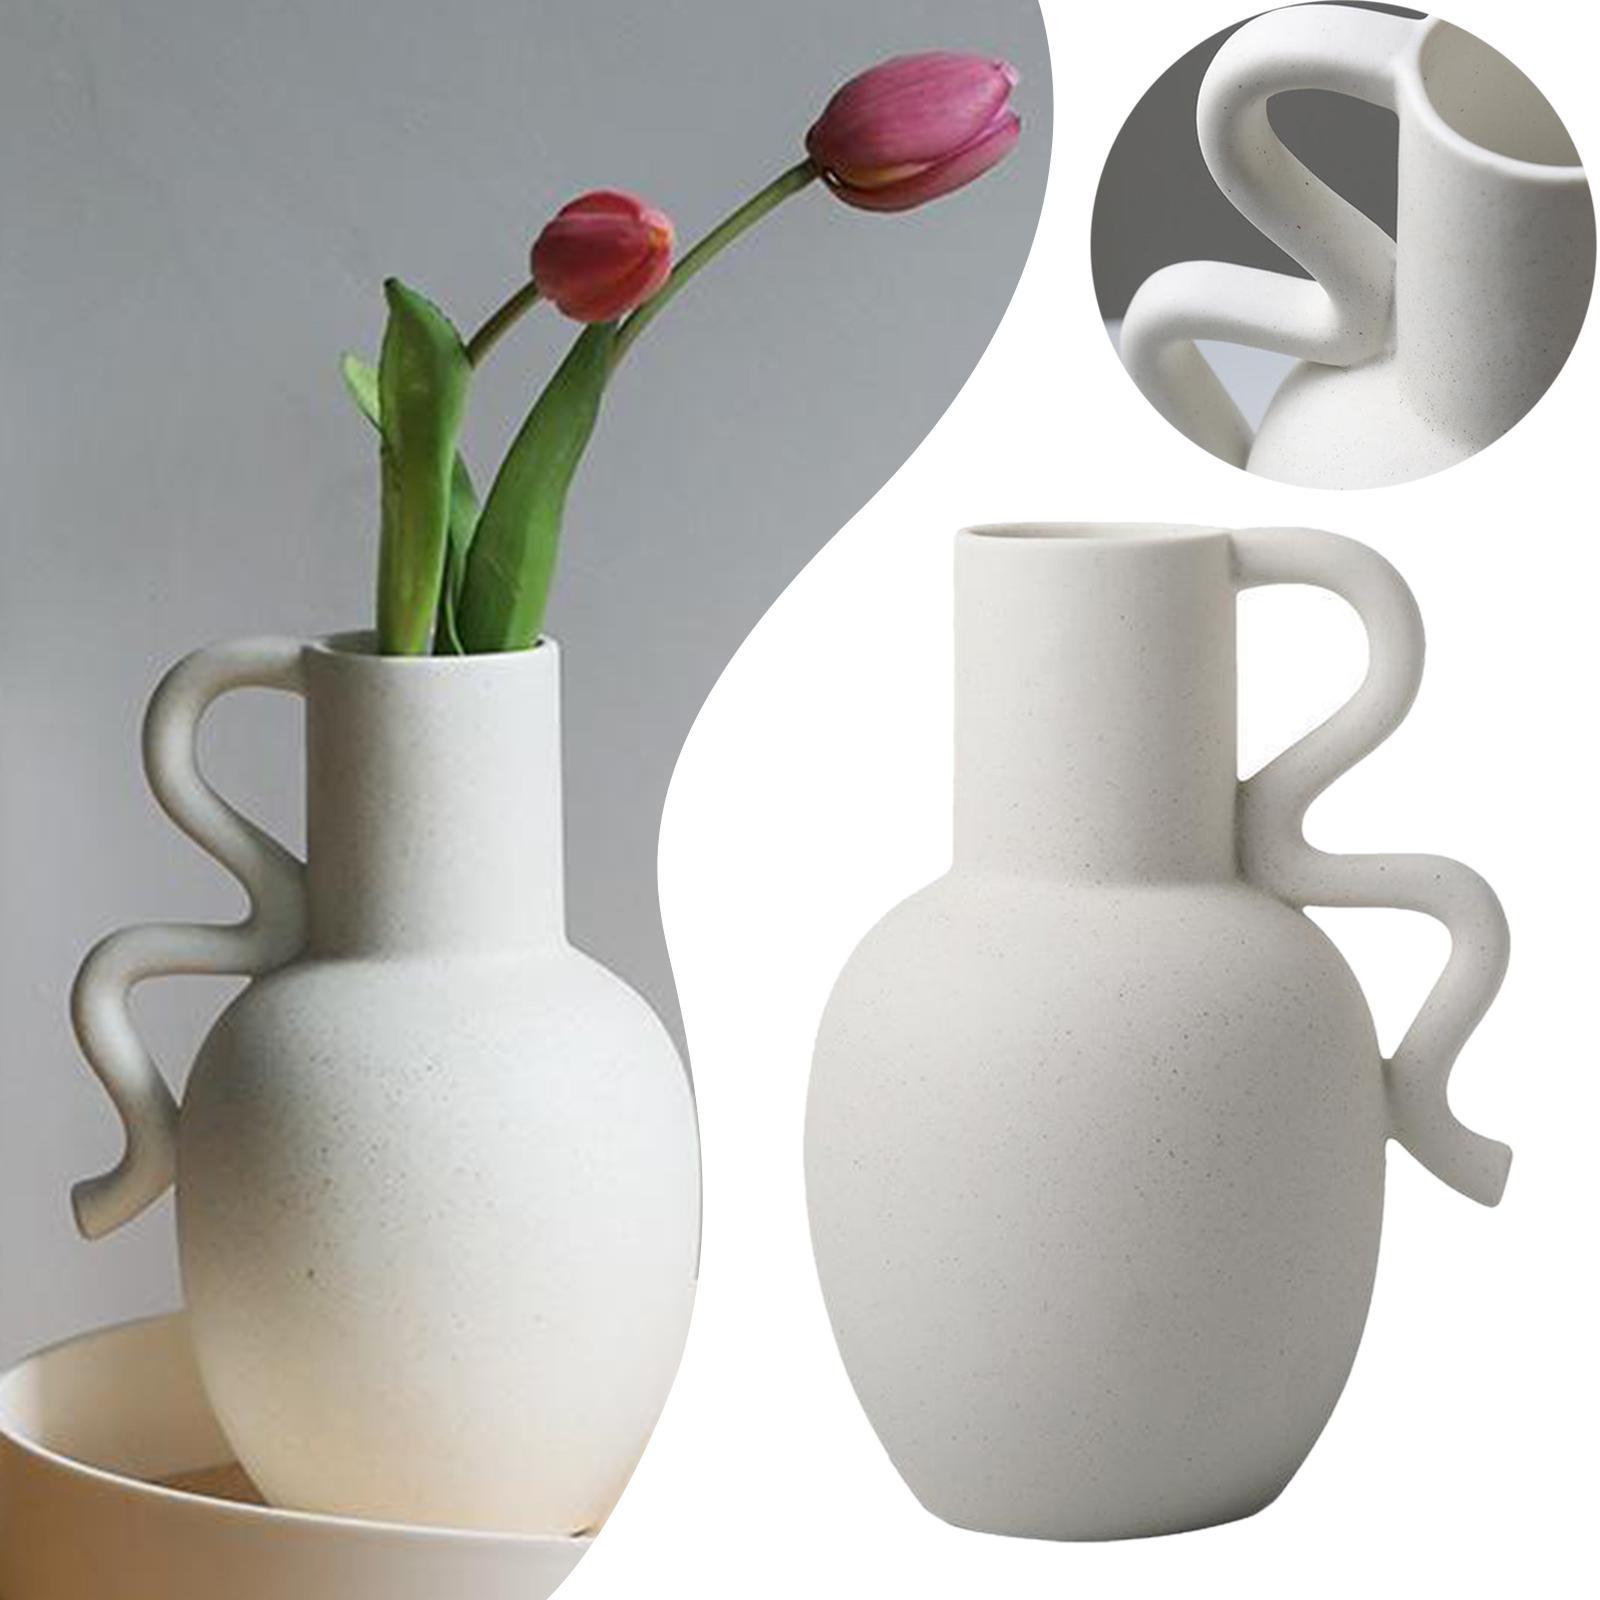 Ceramic Vase Decorative Art Vases Flower Vase Tabletop Vase Home Decoration